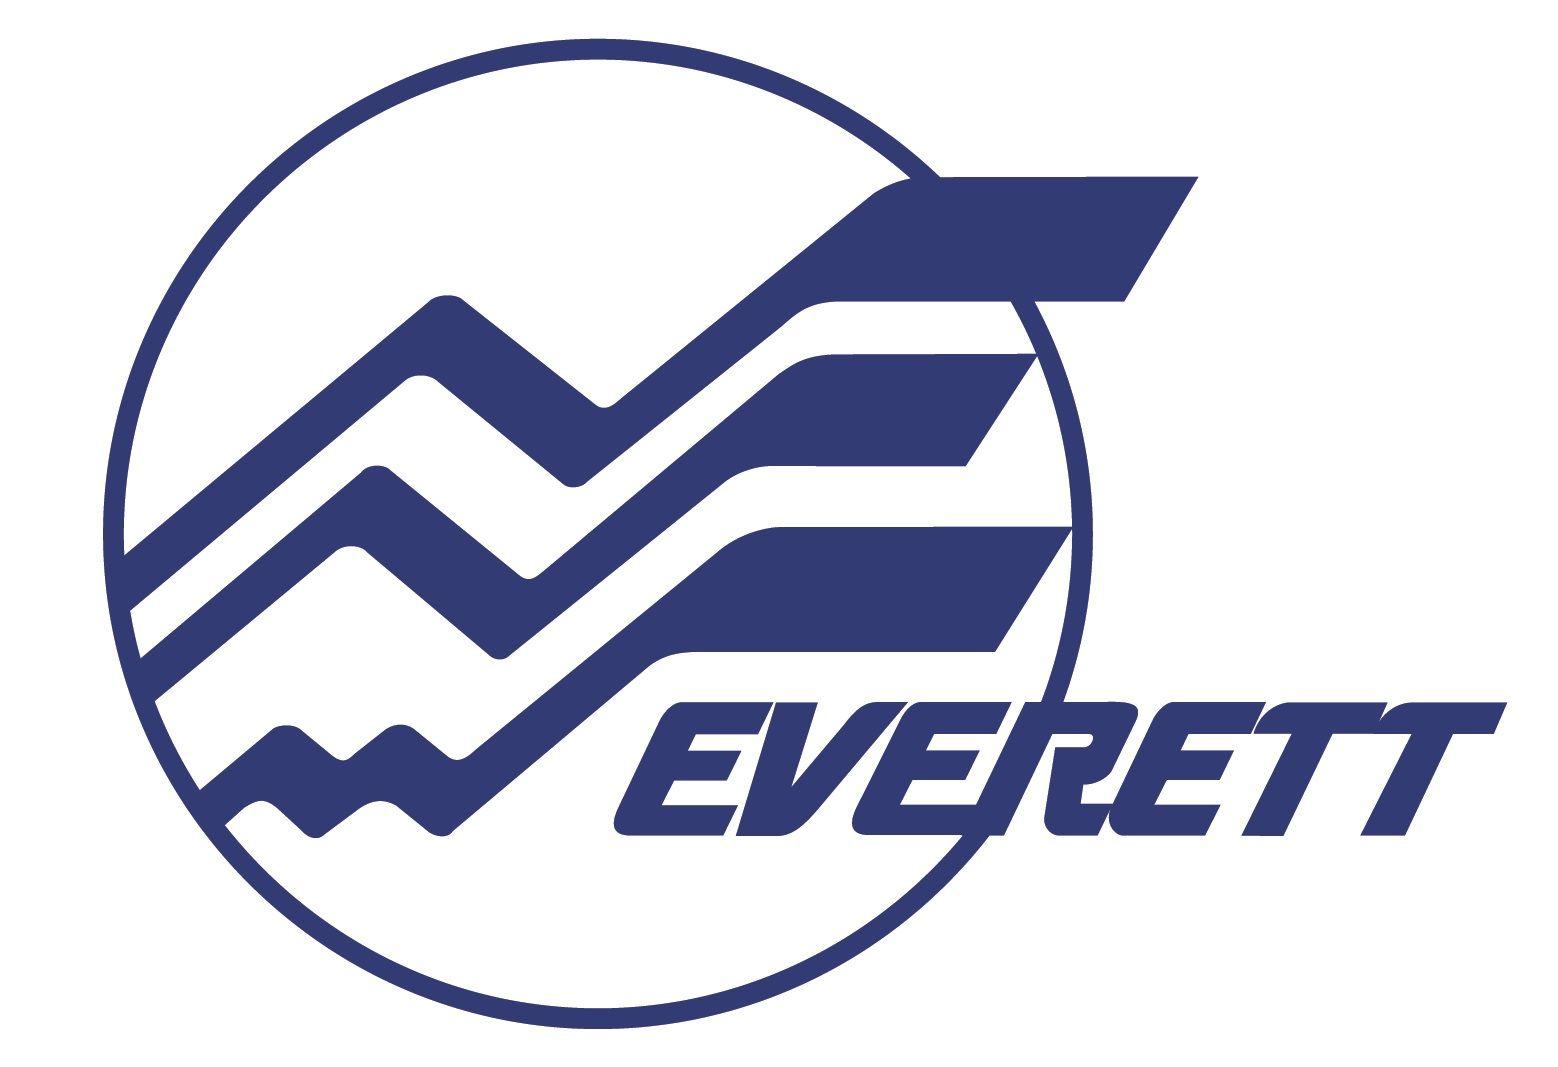 Everett Logo - City of Everett logo | Economic Alliance Snohomish County